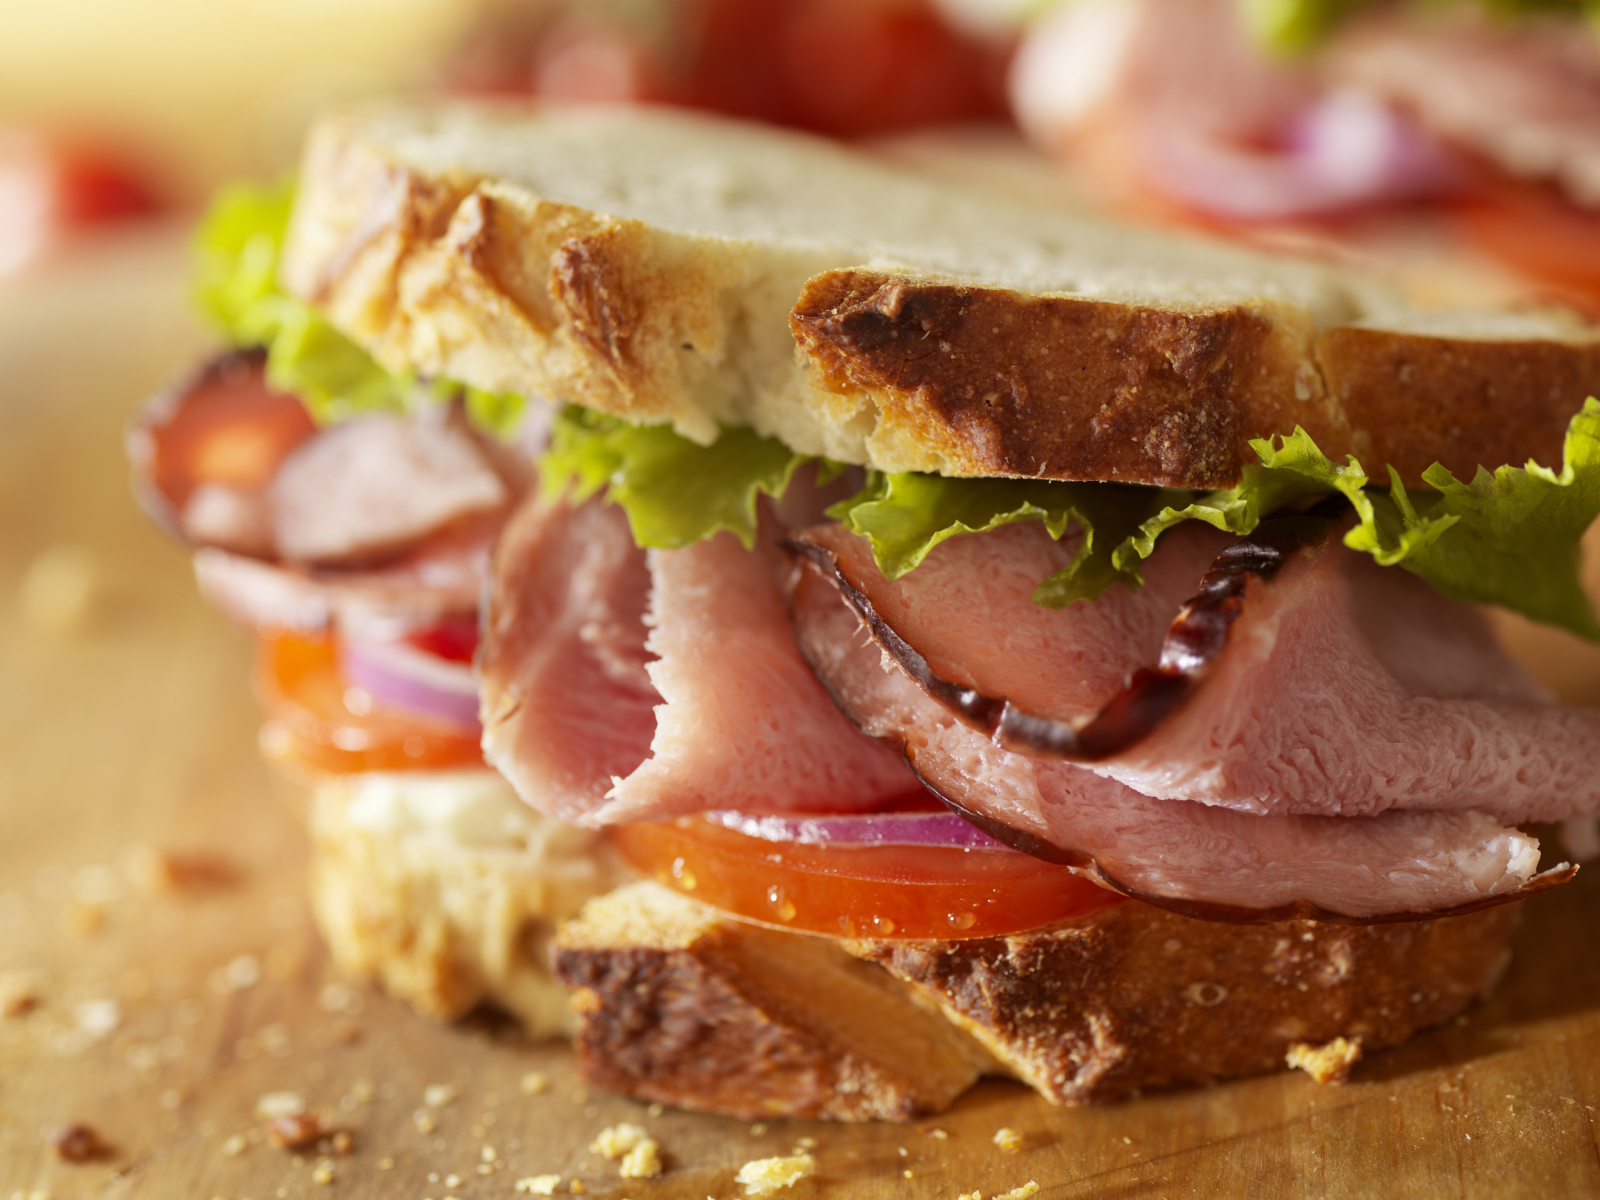 Rustic-ham-sandwich1.jpg